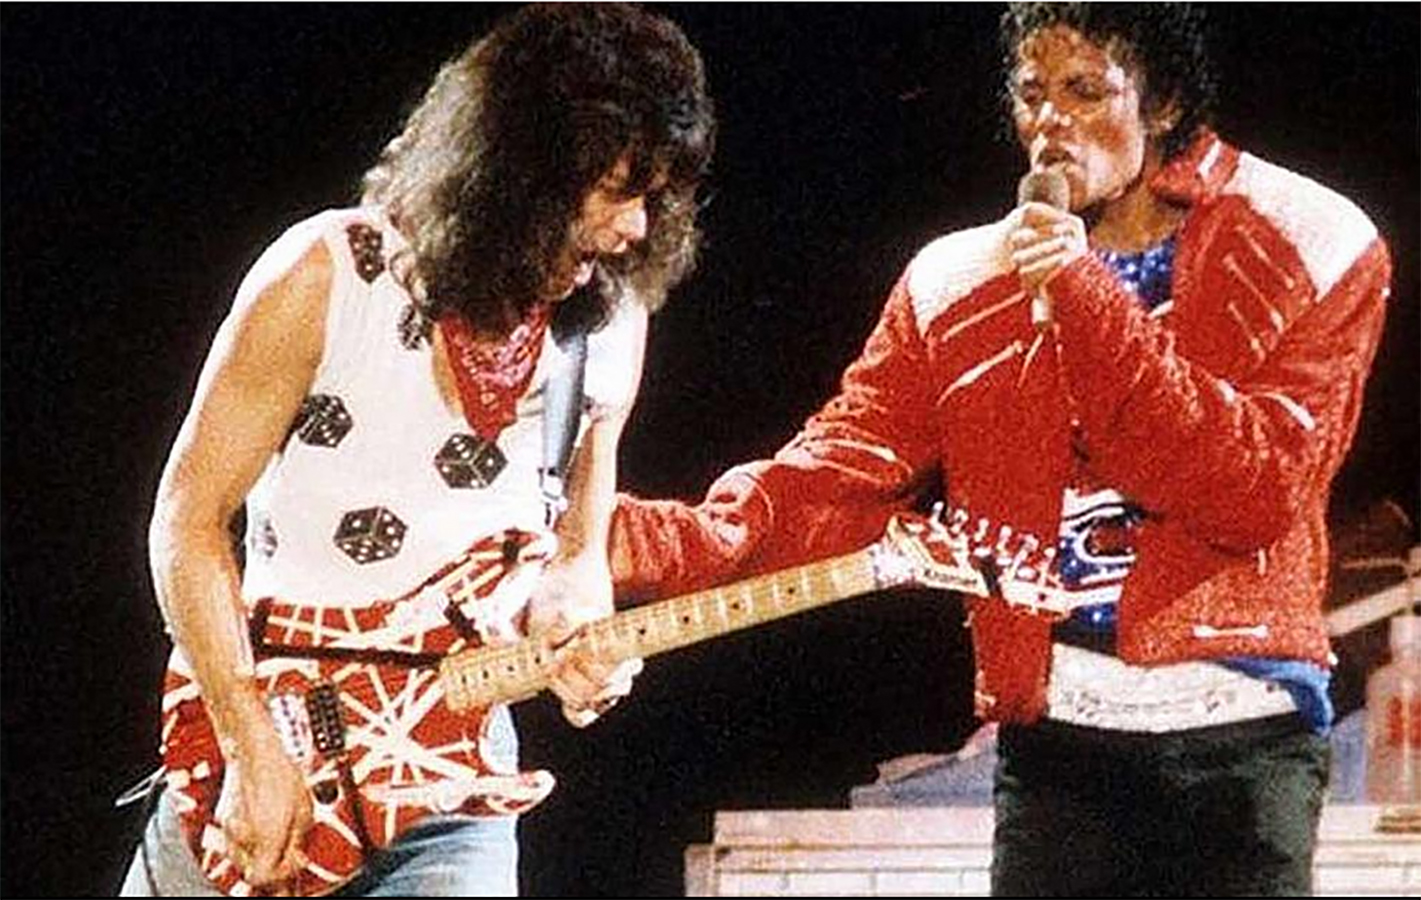 Rest In Peace, Eddie Van Halen